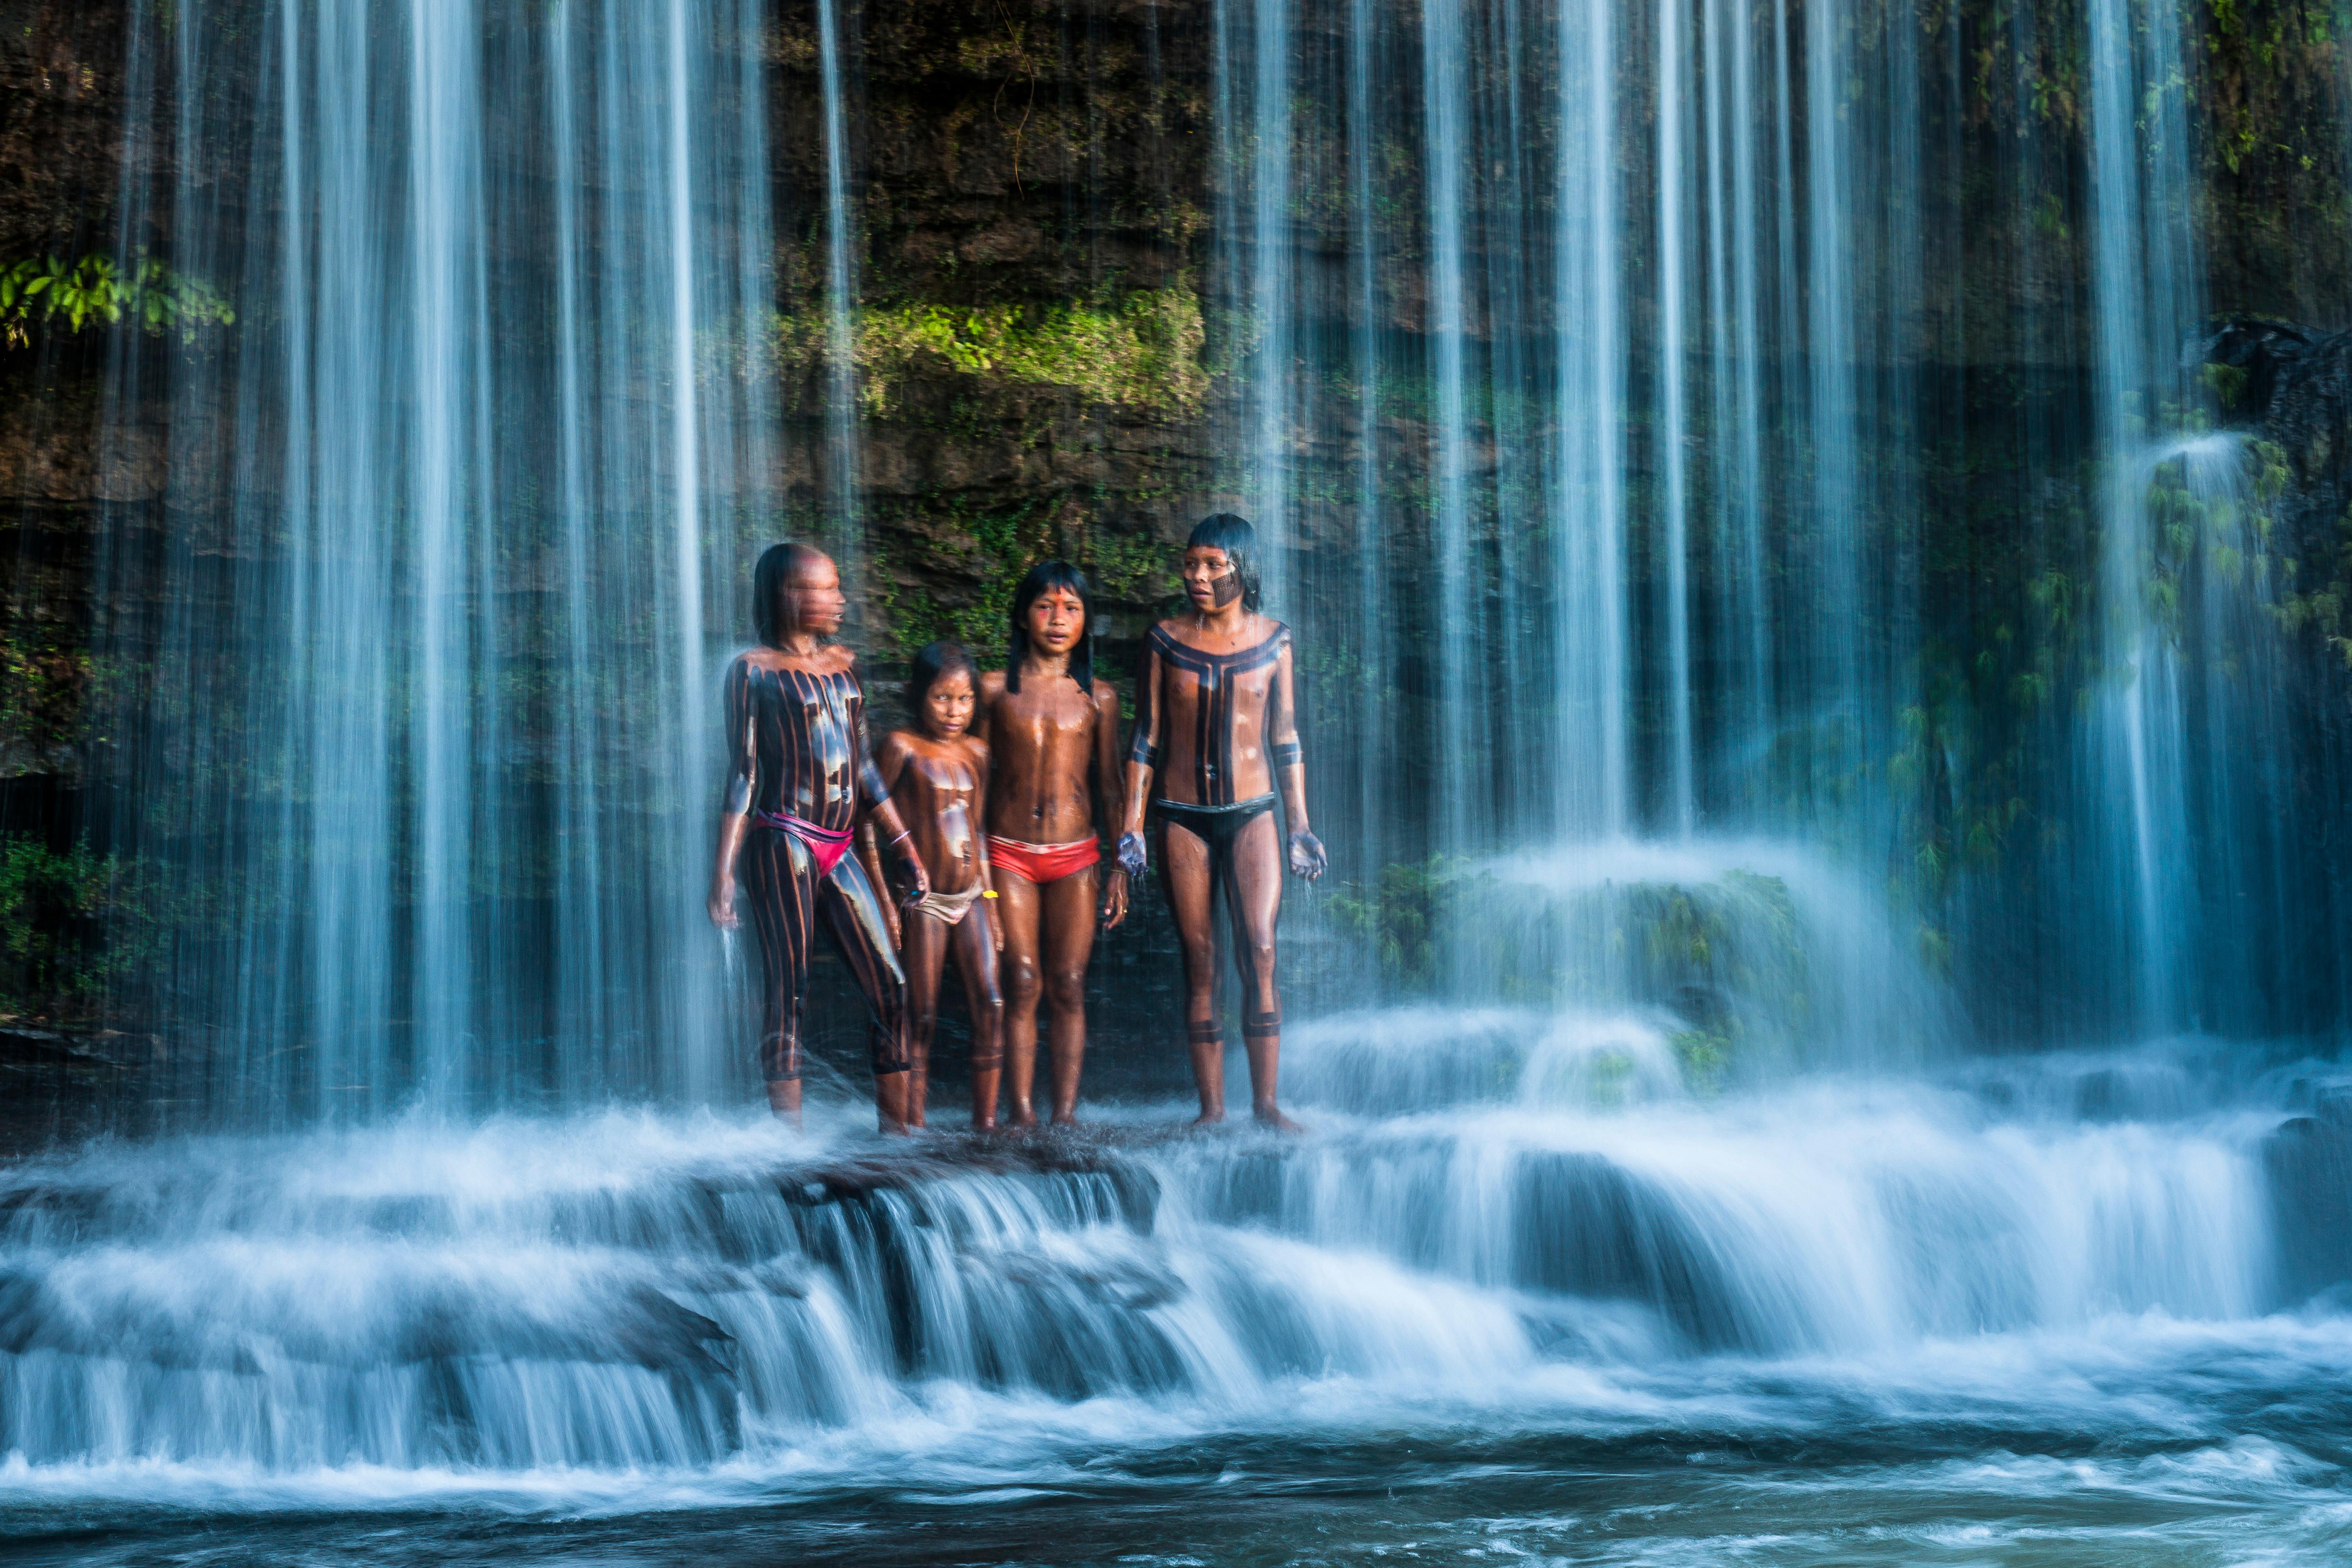 Cristina Mittermeier Color Photograph - Waterfall Bath